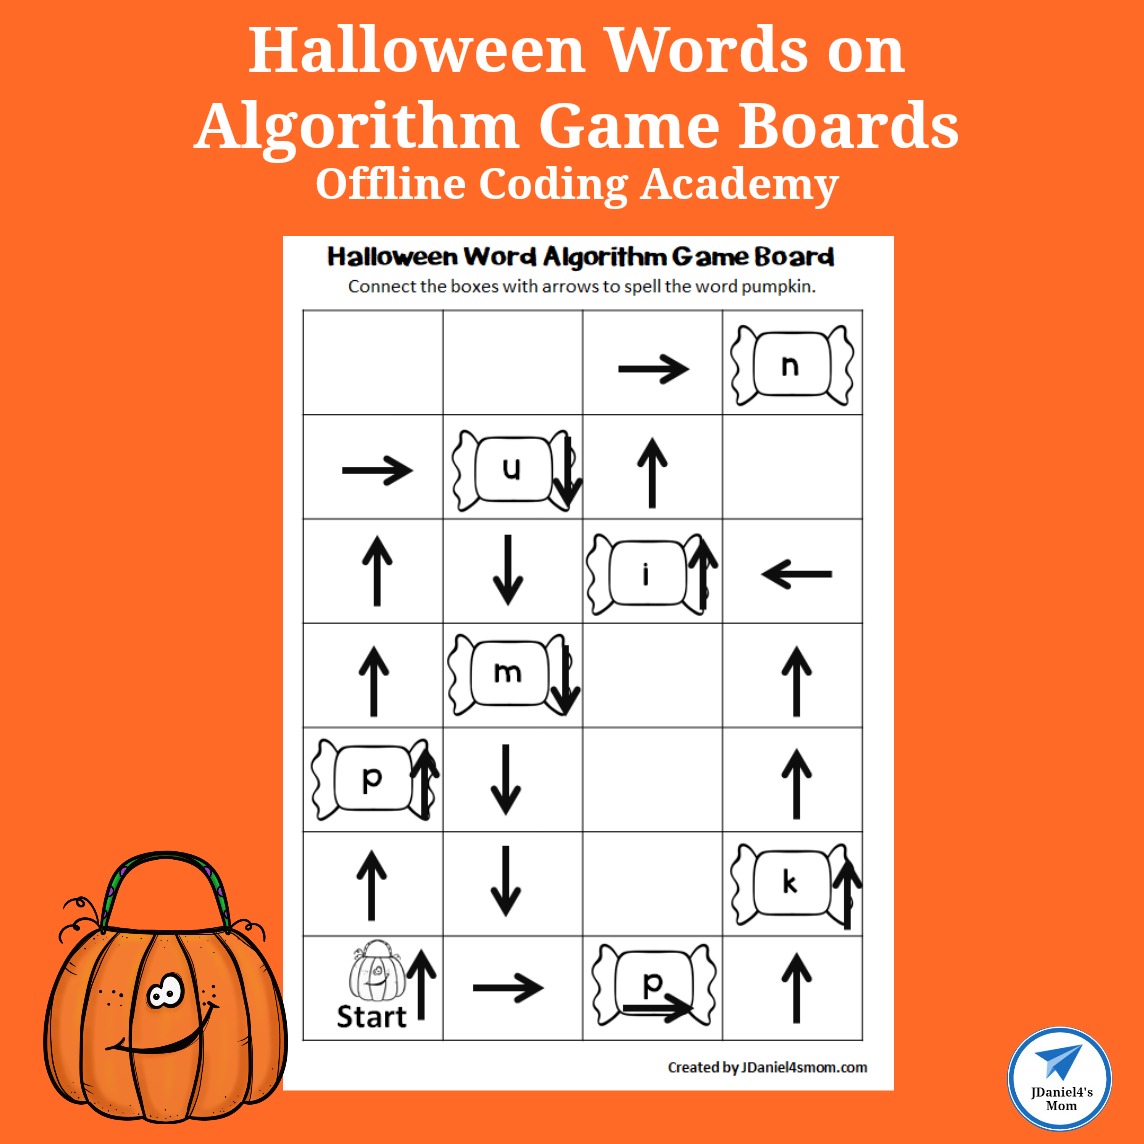 Halloween Words on Algorithm Game Boards Offline Coding Academy 